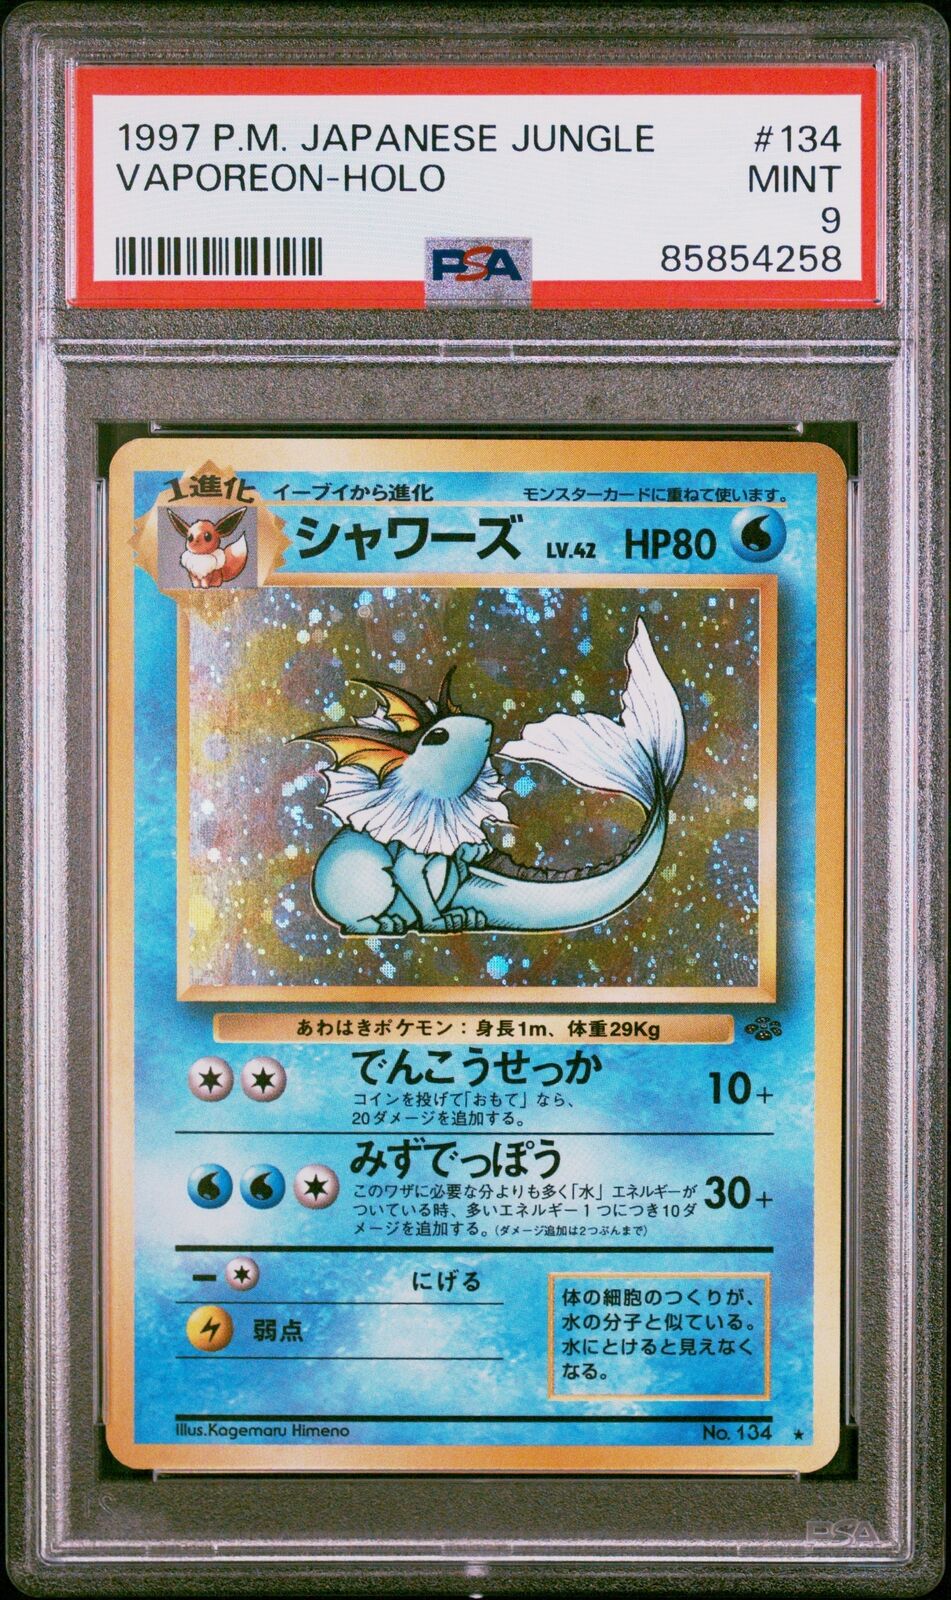 PSA 9 MINT Vaporeon Jungle 134 Japanese Holo Rare 1997 Pokemon Card Graded